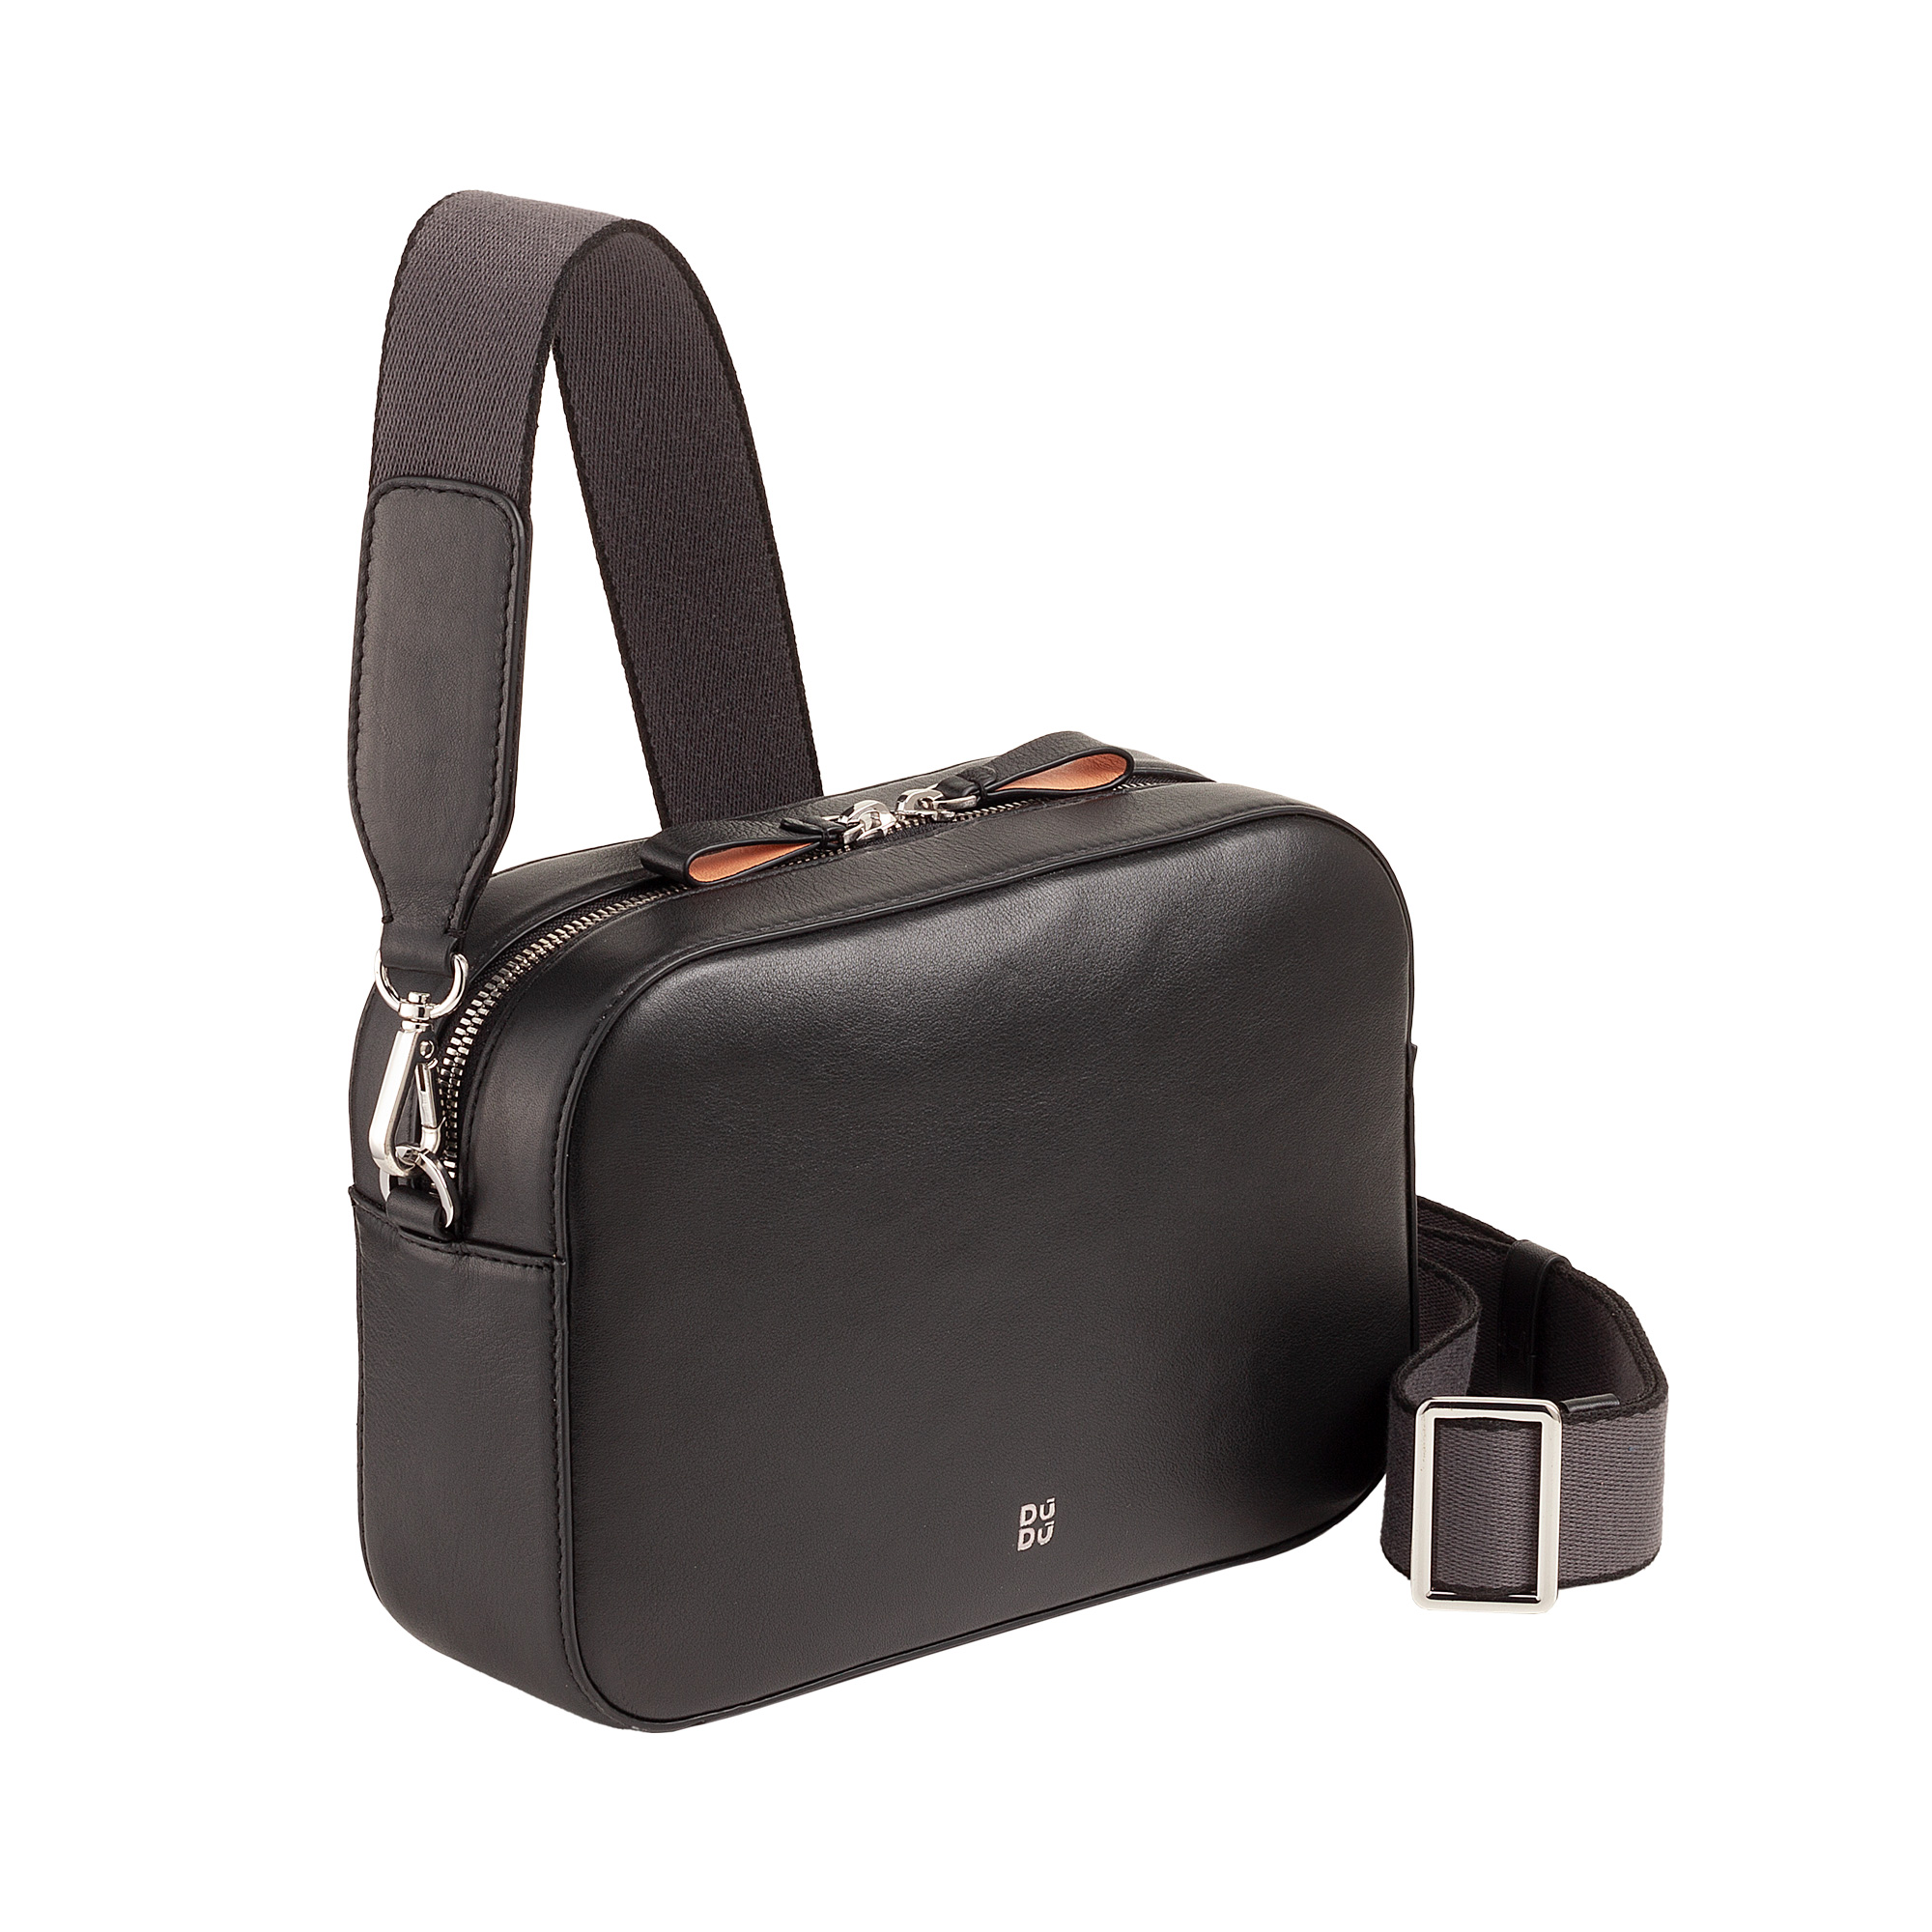 Leather Camera Bag. Designer Camera Bag. 100% Nappa Leather.